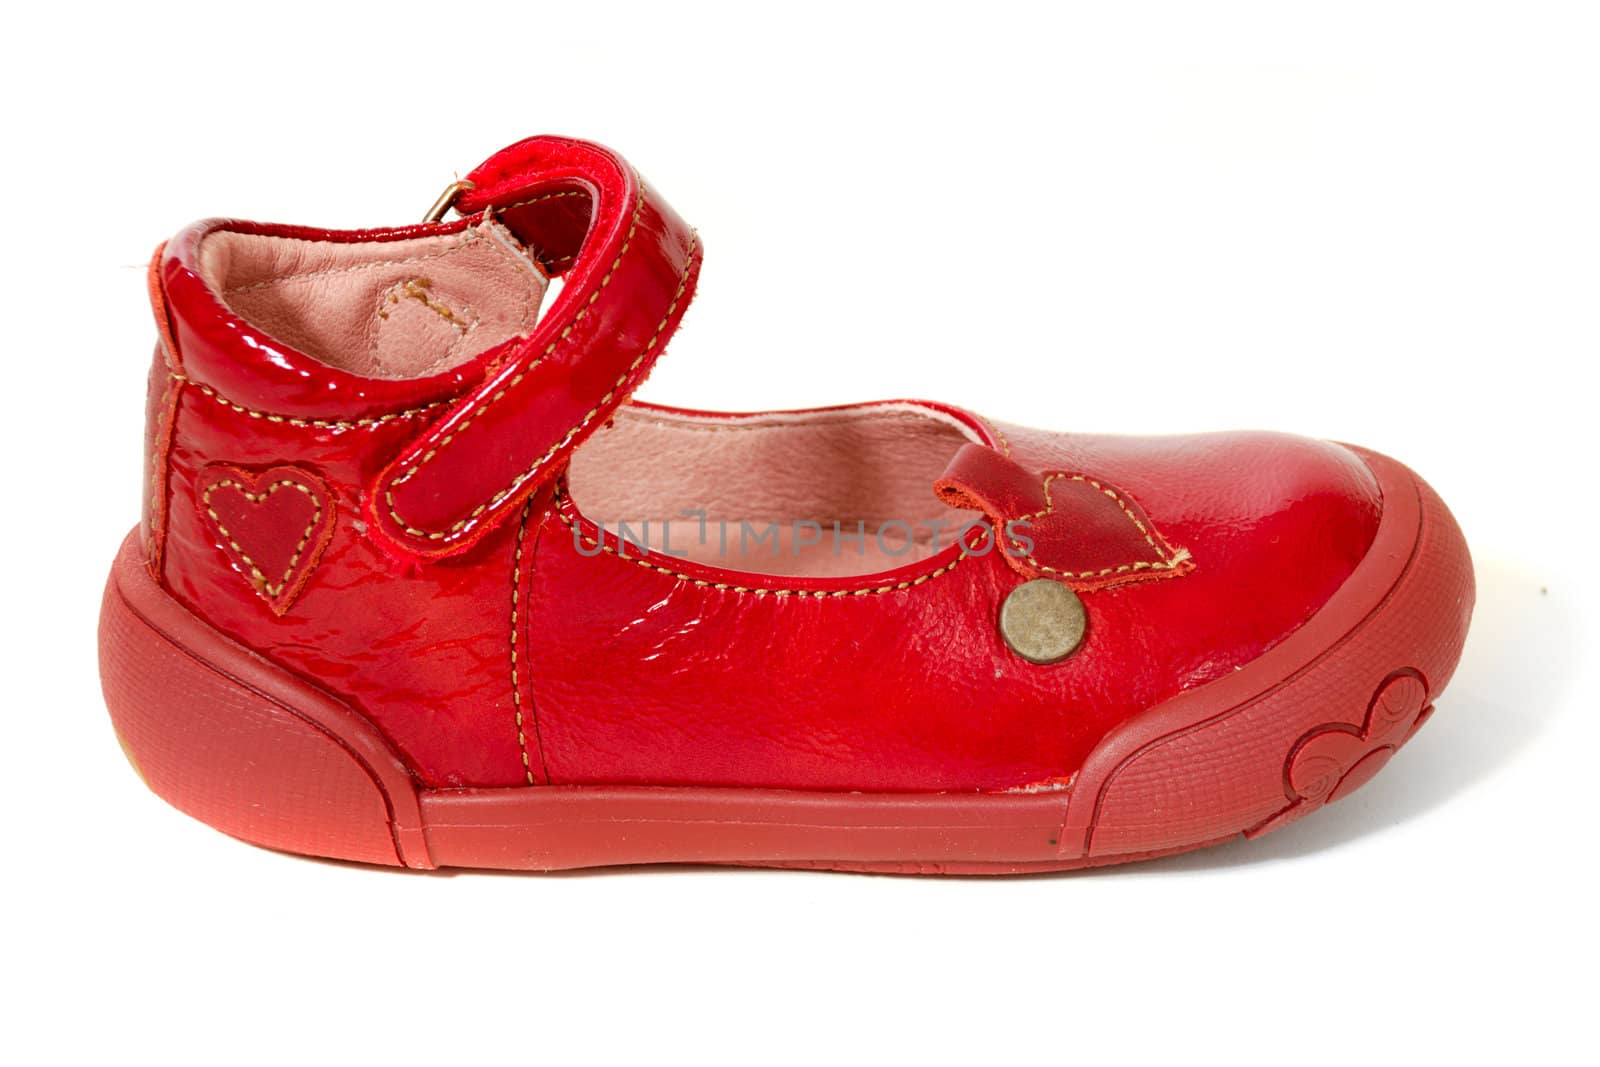 Red shoe by cfoto